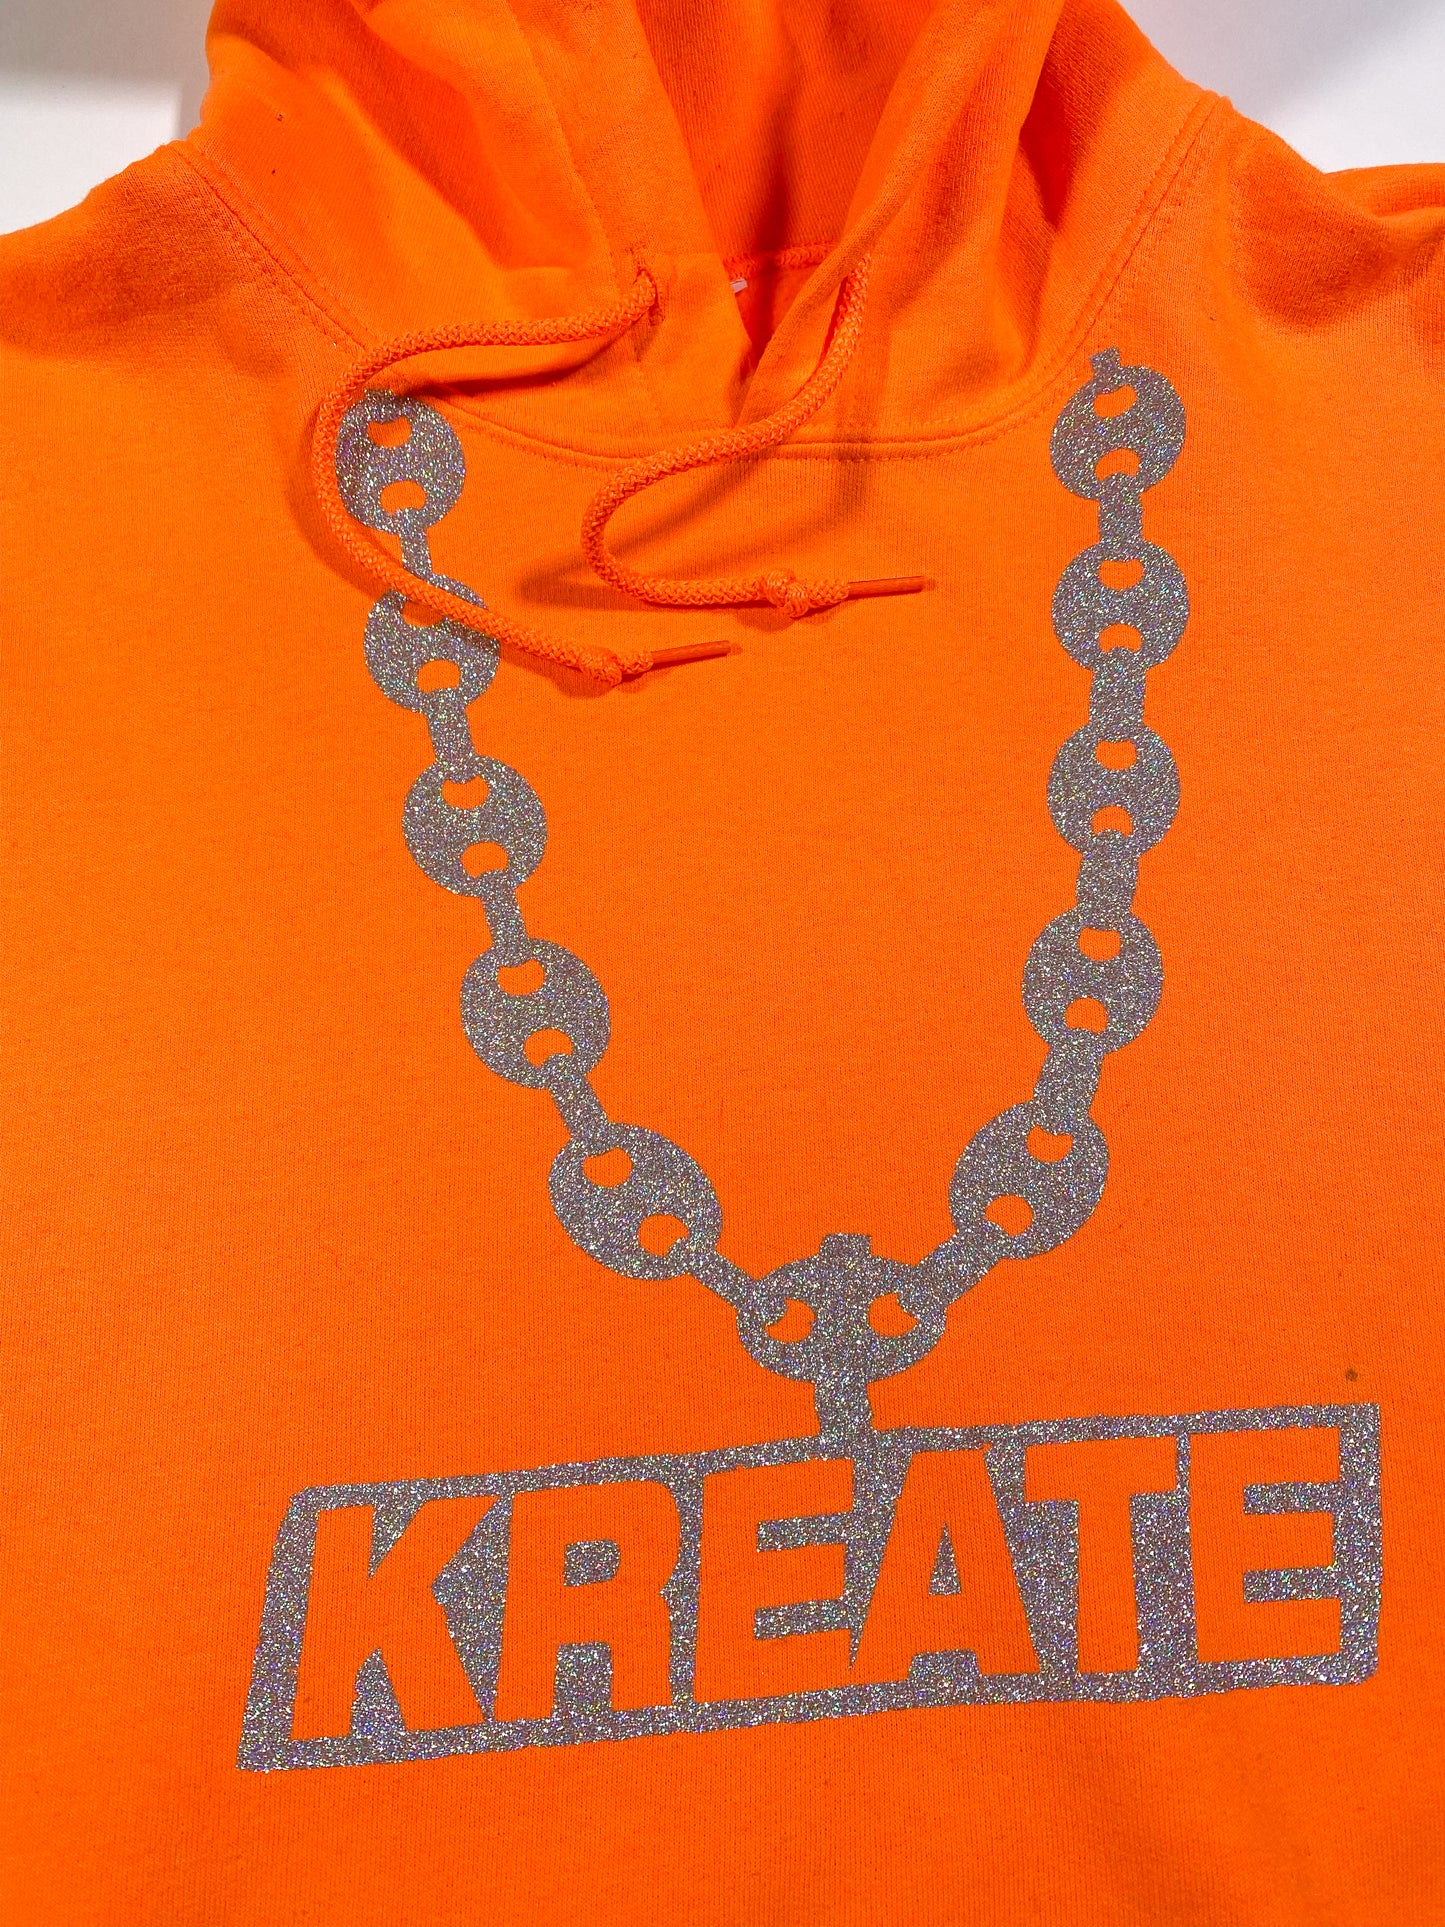 Orange Kreate Chain Hoodie